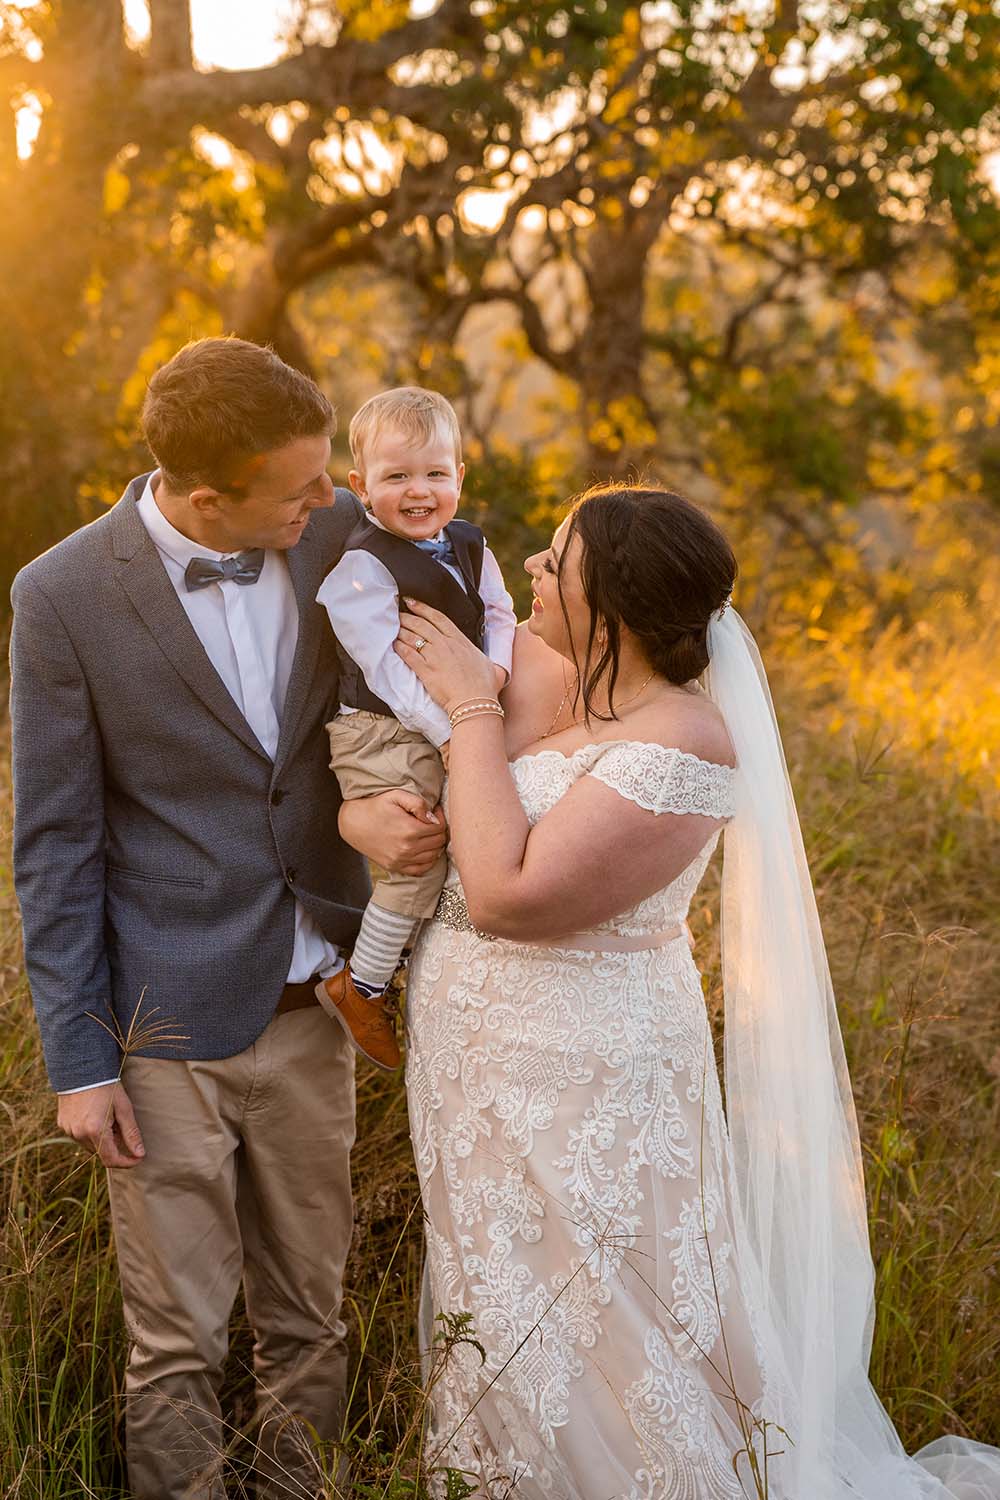 Wedding Photography - Family